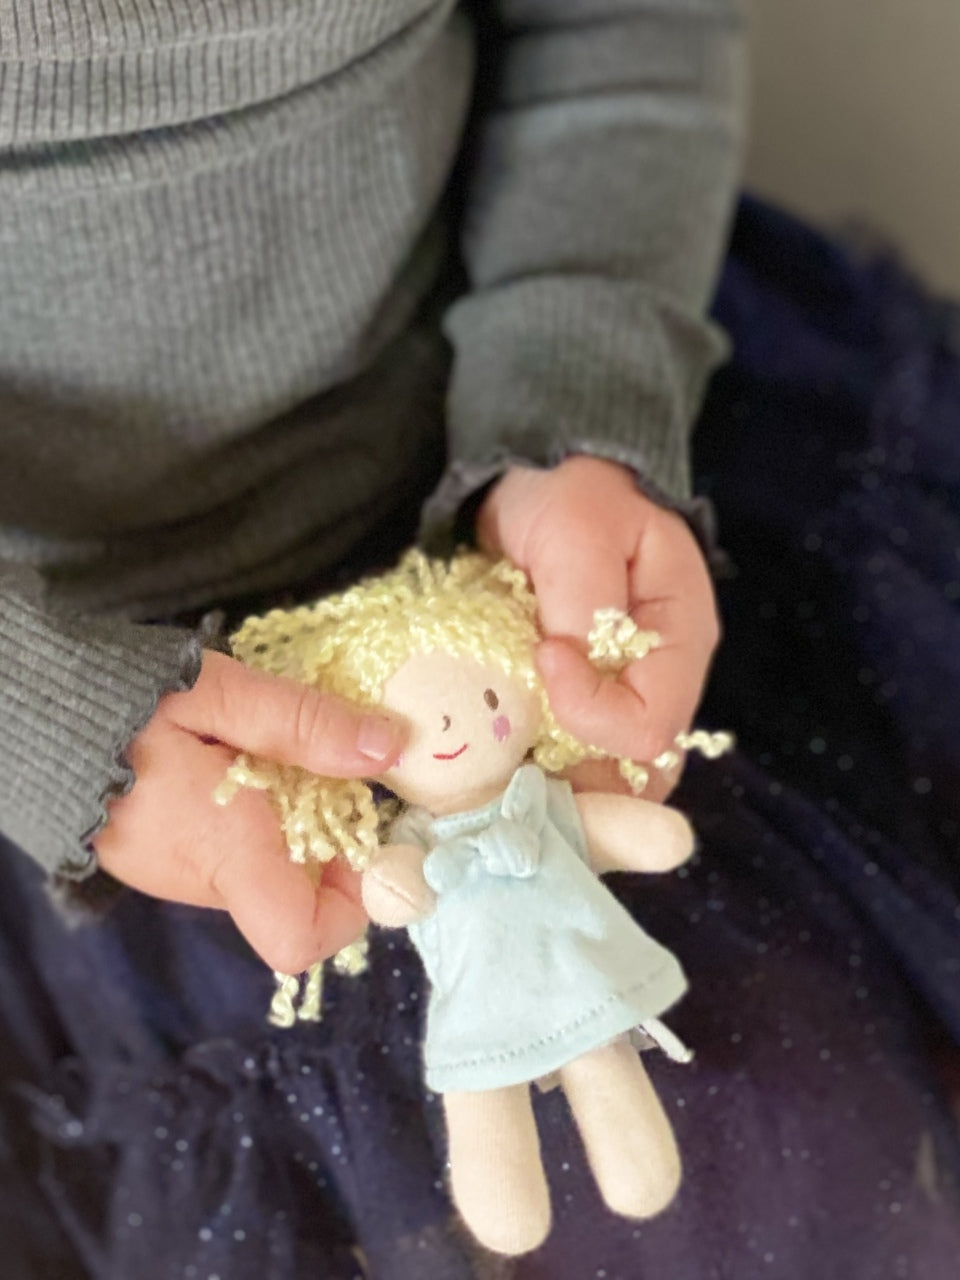 thread bear design mini fifi doll